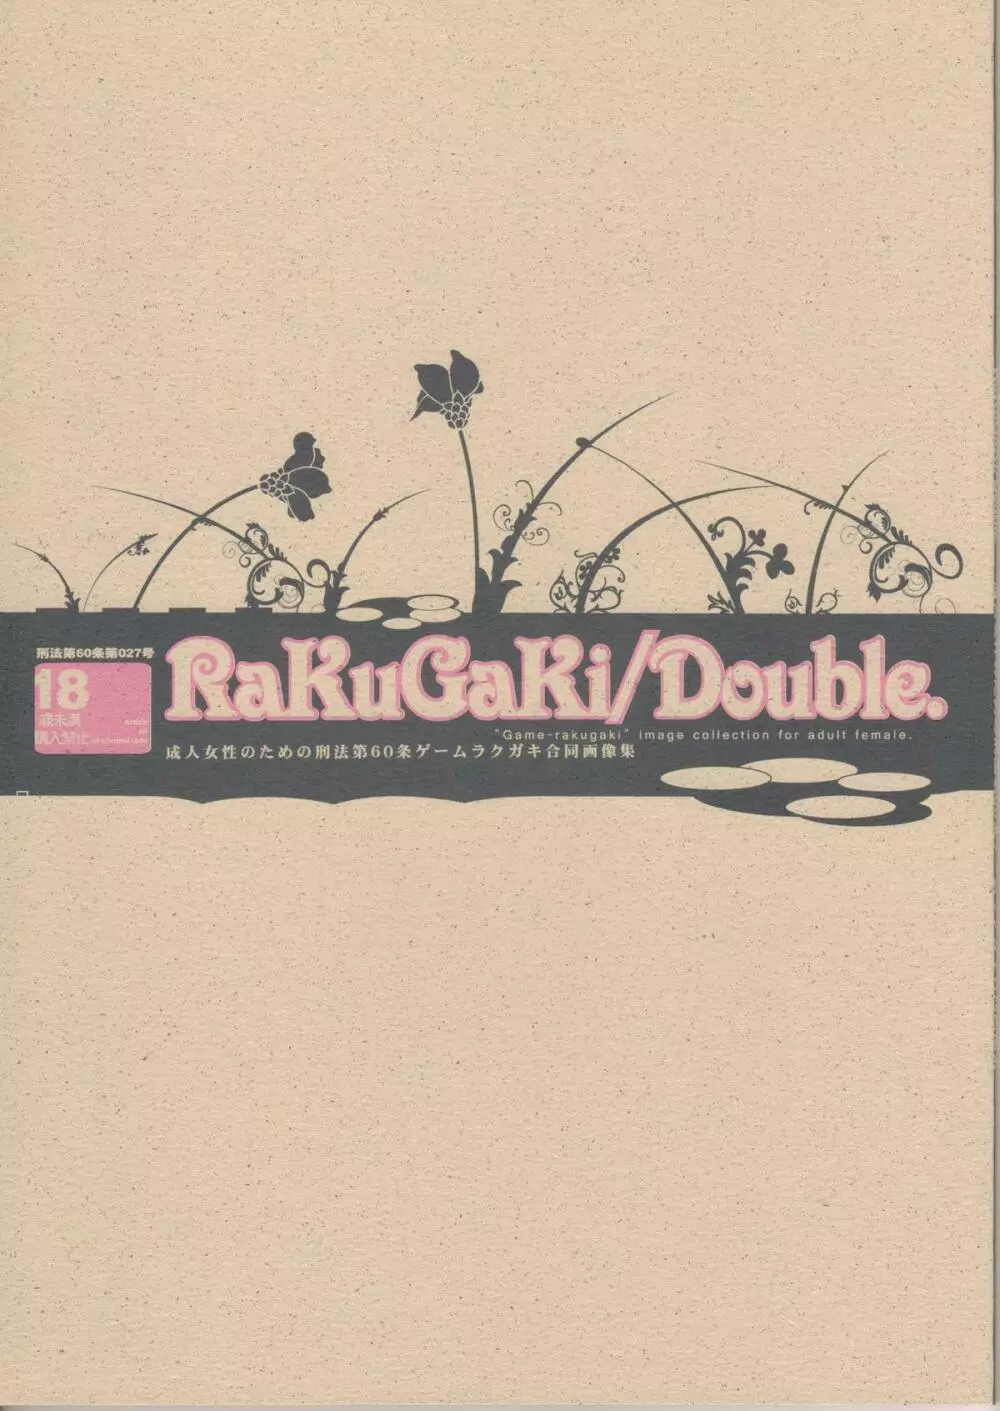 RaKuGaKi./Double.